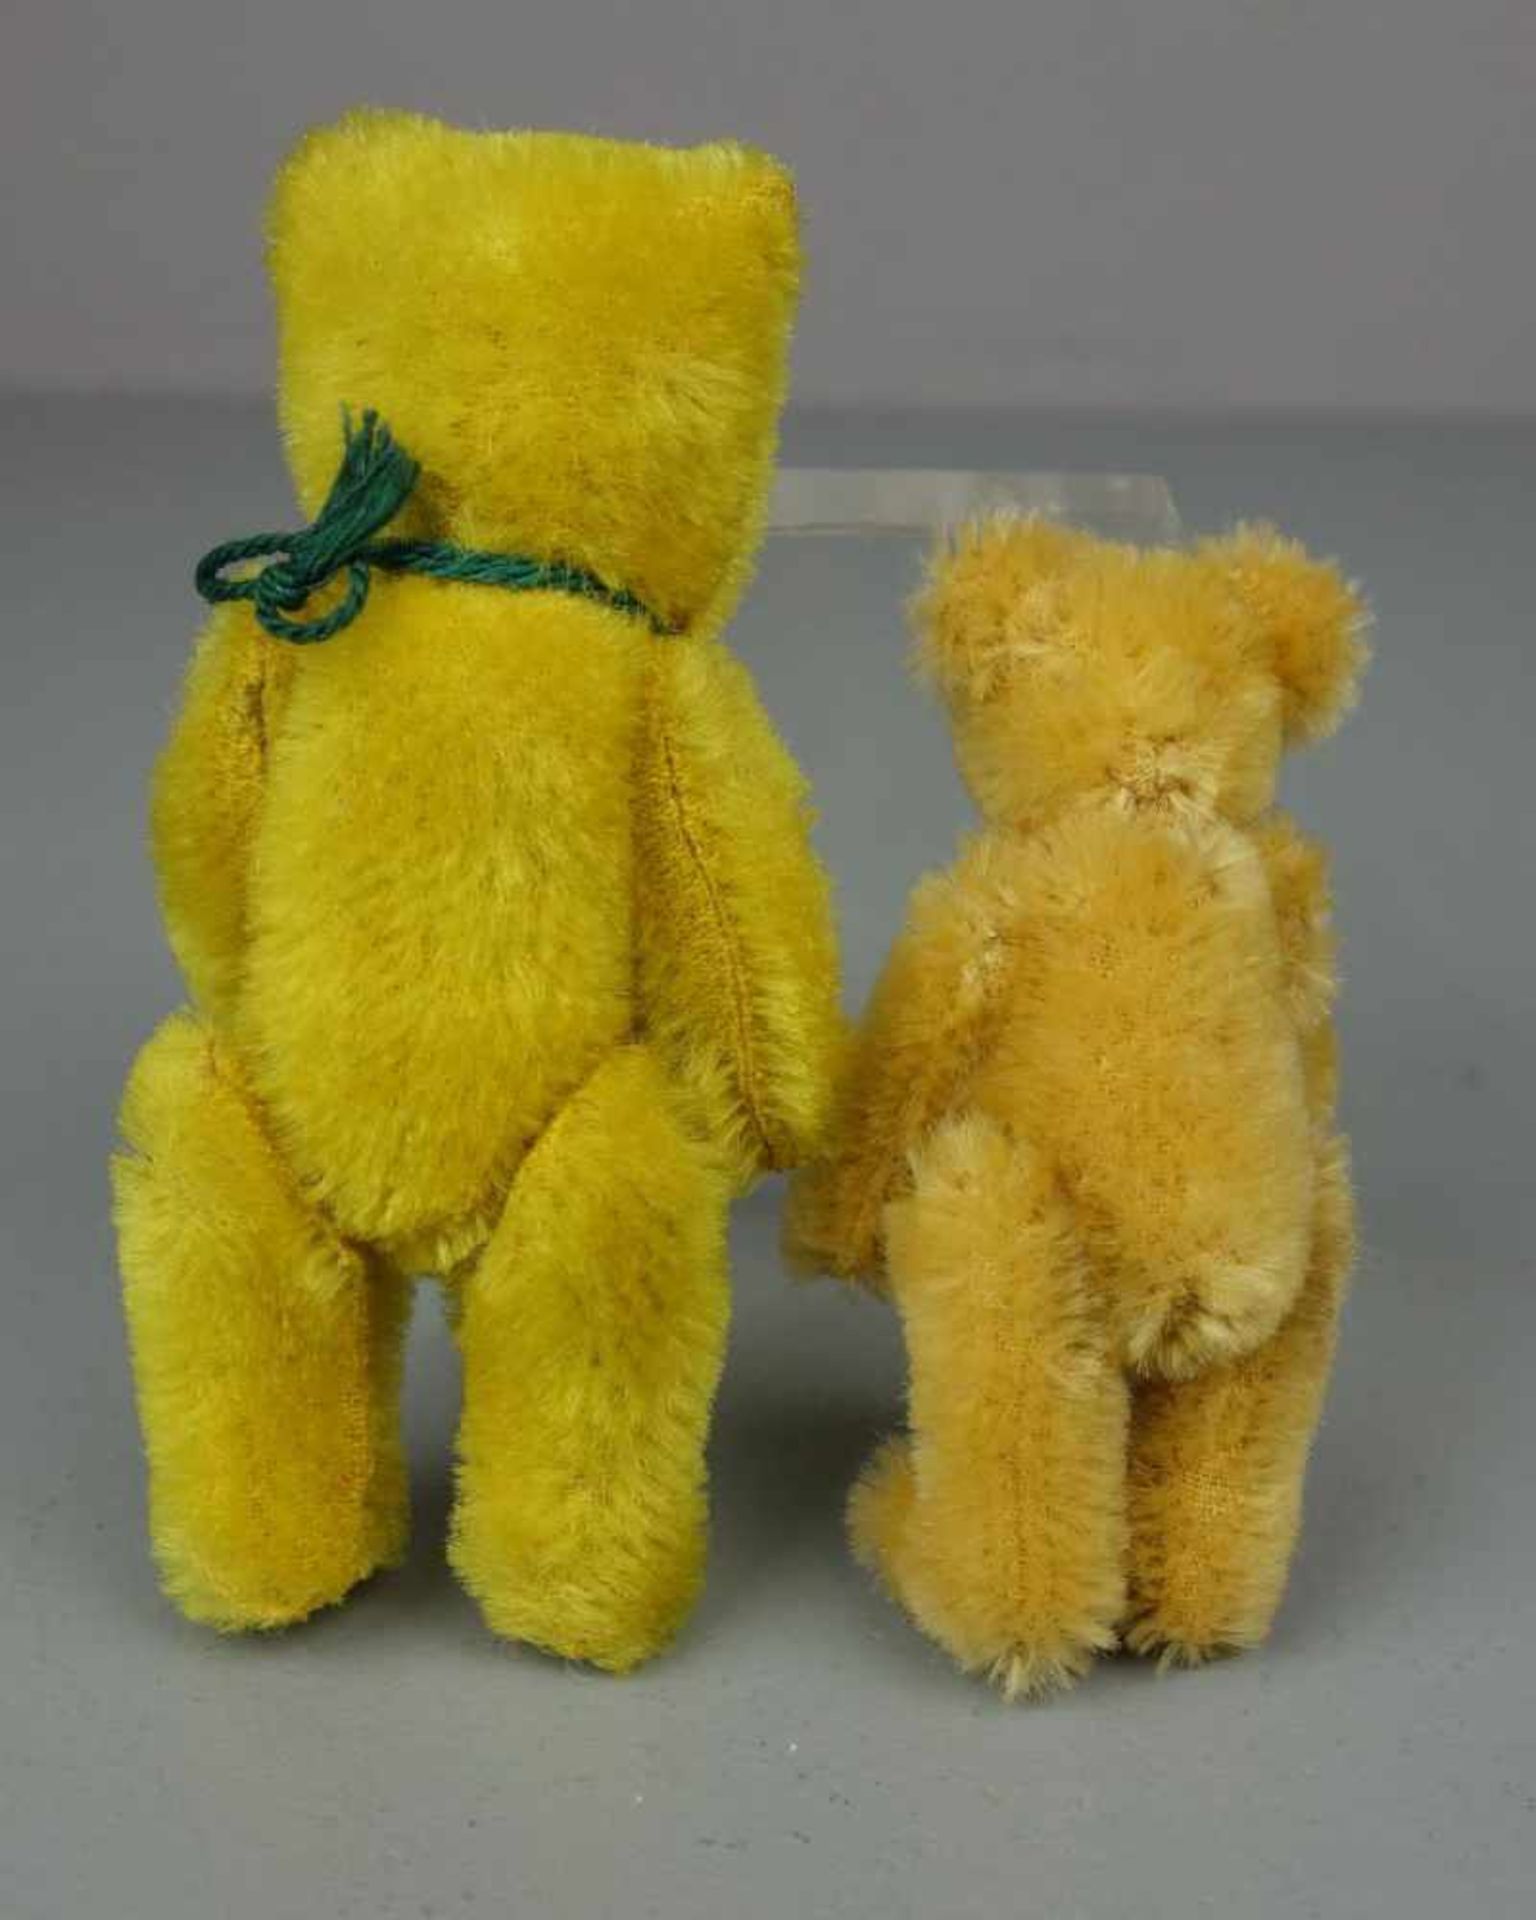 PLÜSCHTIERE / TEDDYBÄREN: Konvolut Miniatur Teddys / Bären - 6 Stück / six teddy bears, 20. Jh., - Bild 8 aus 8